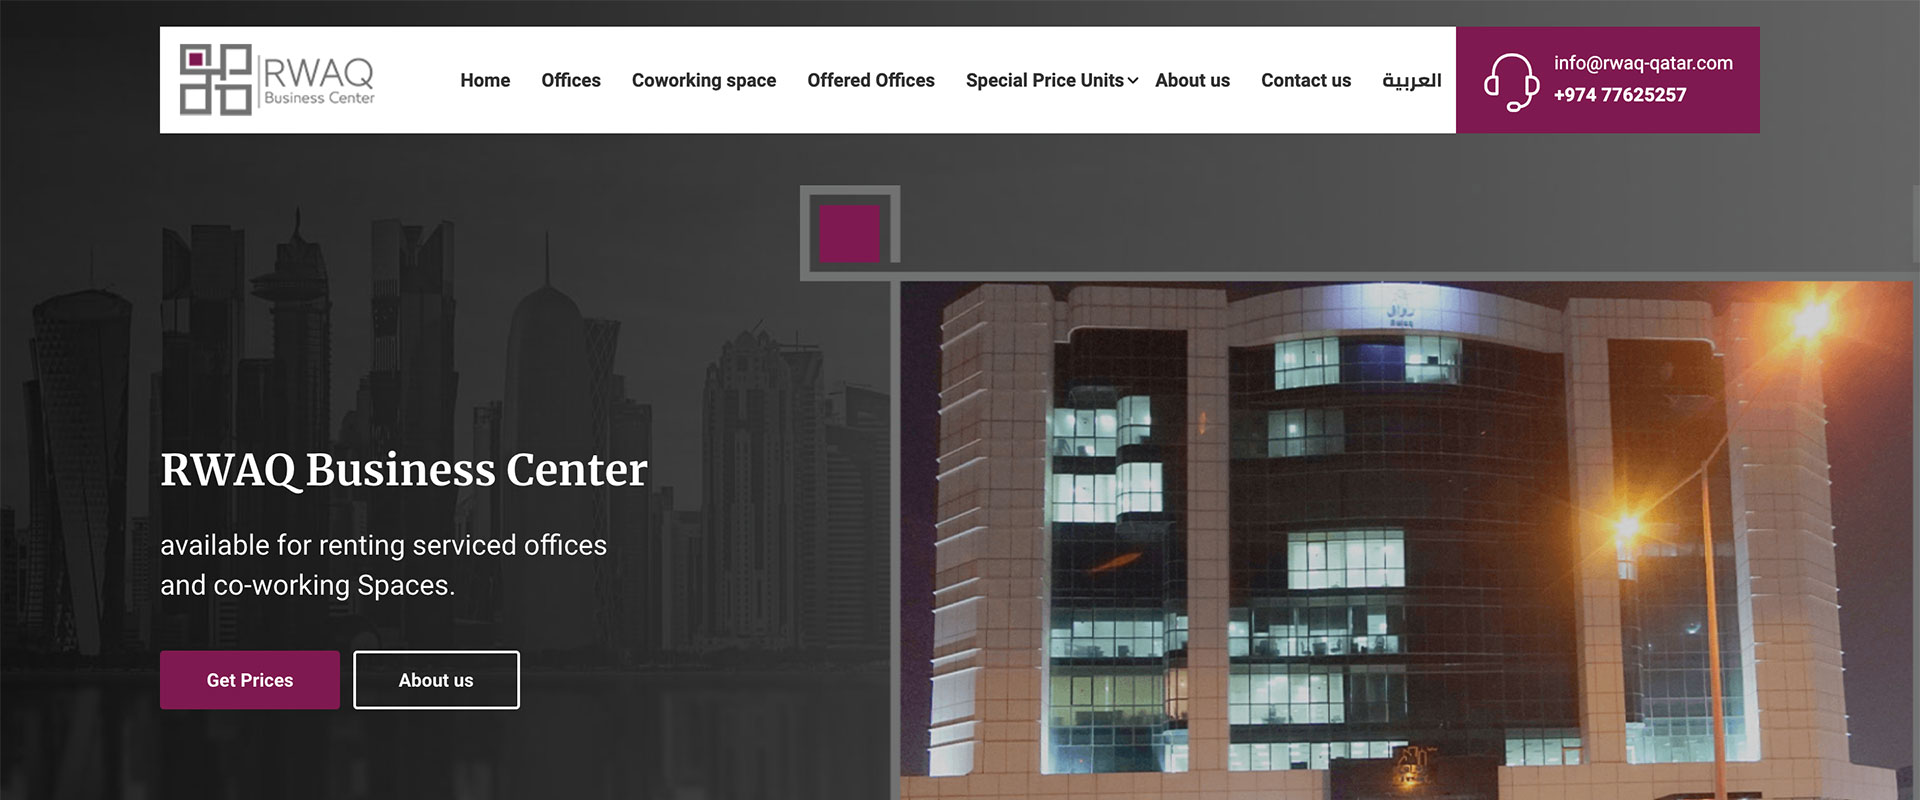 Rwaq Business Center Qatar